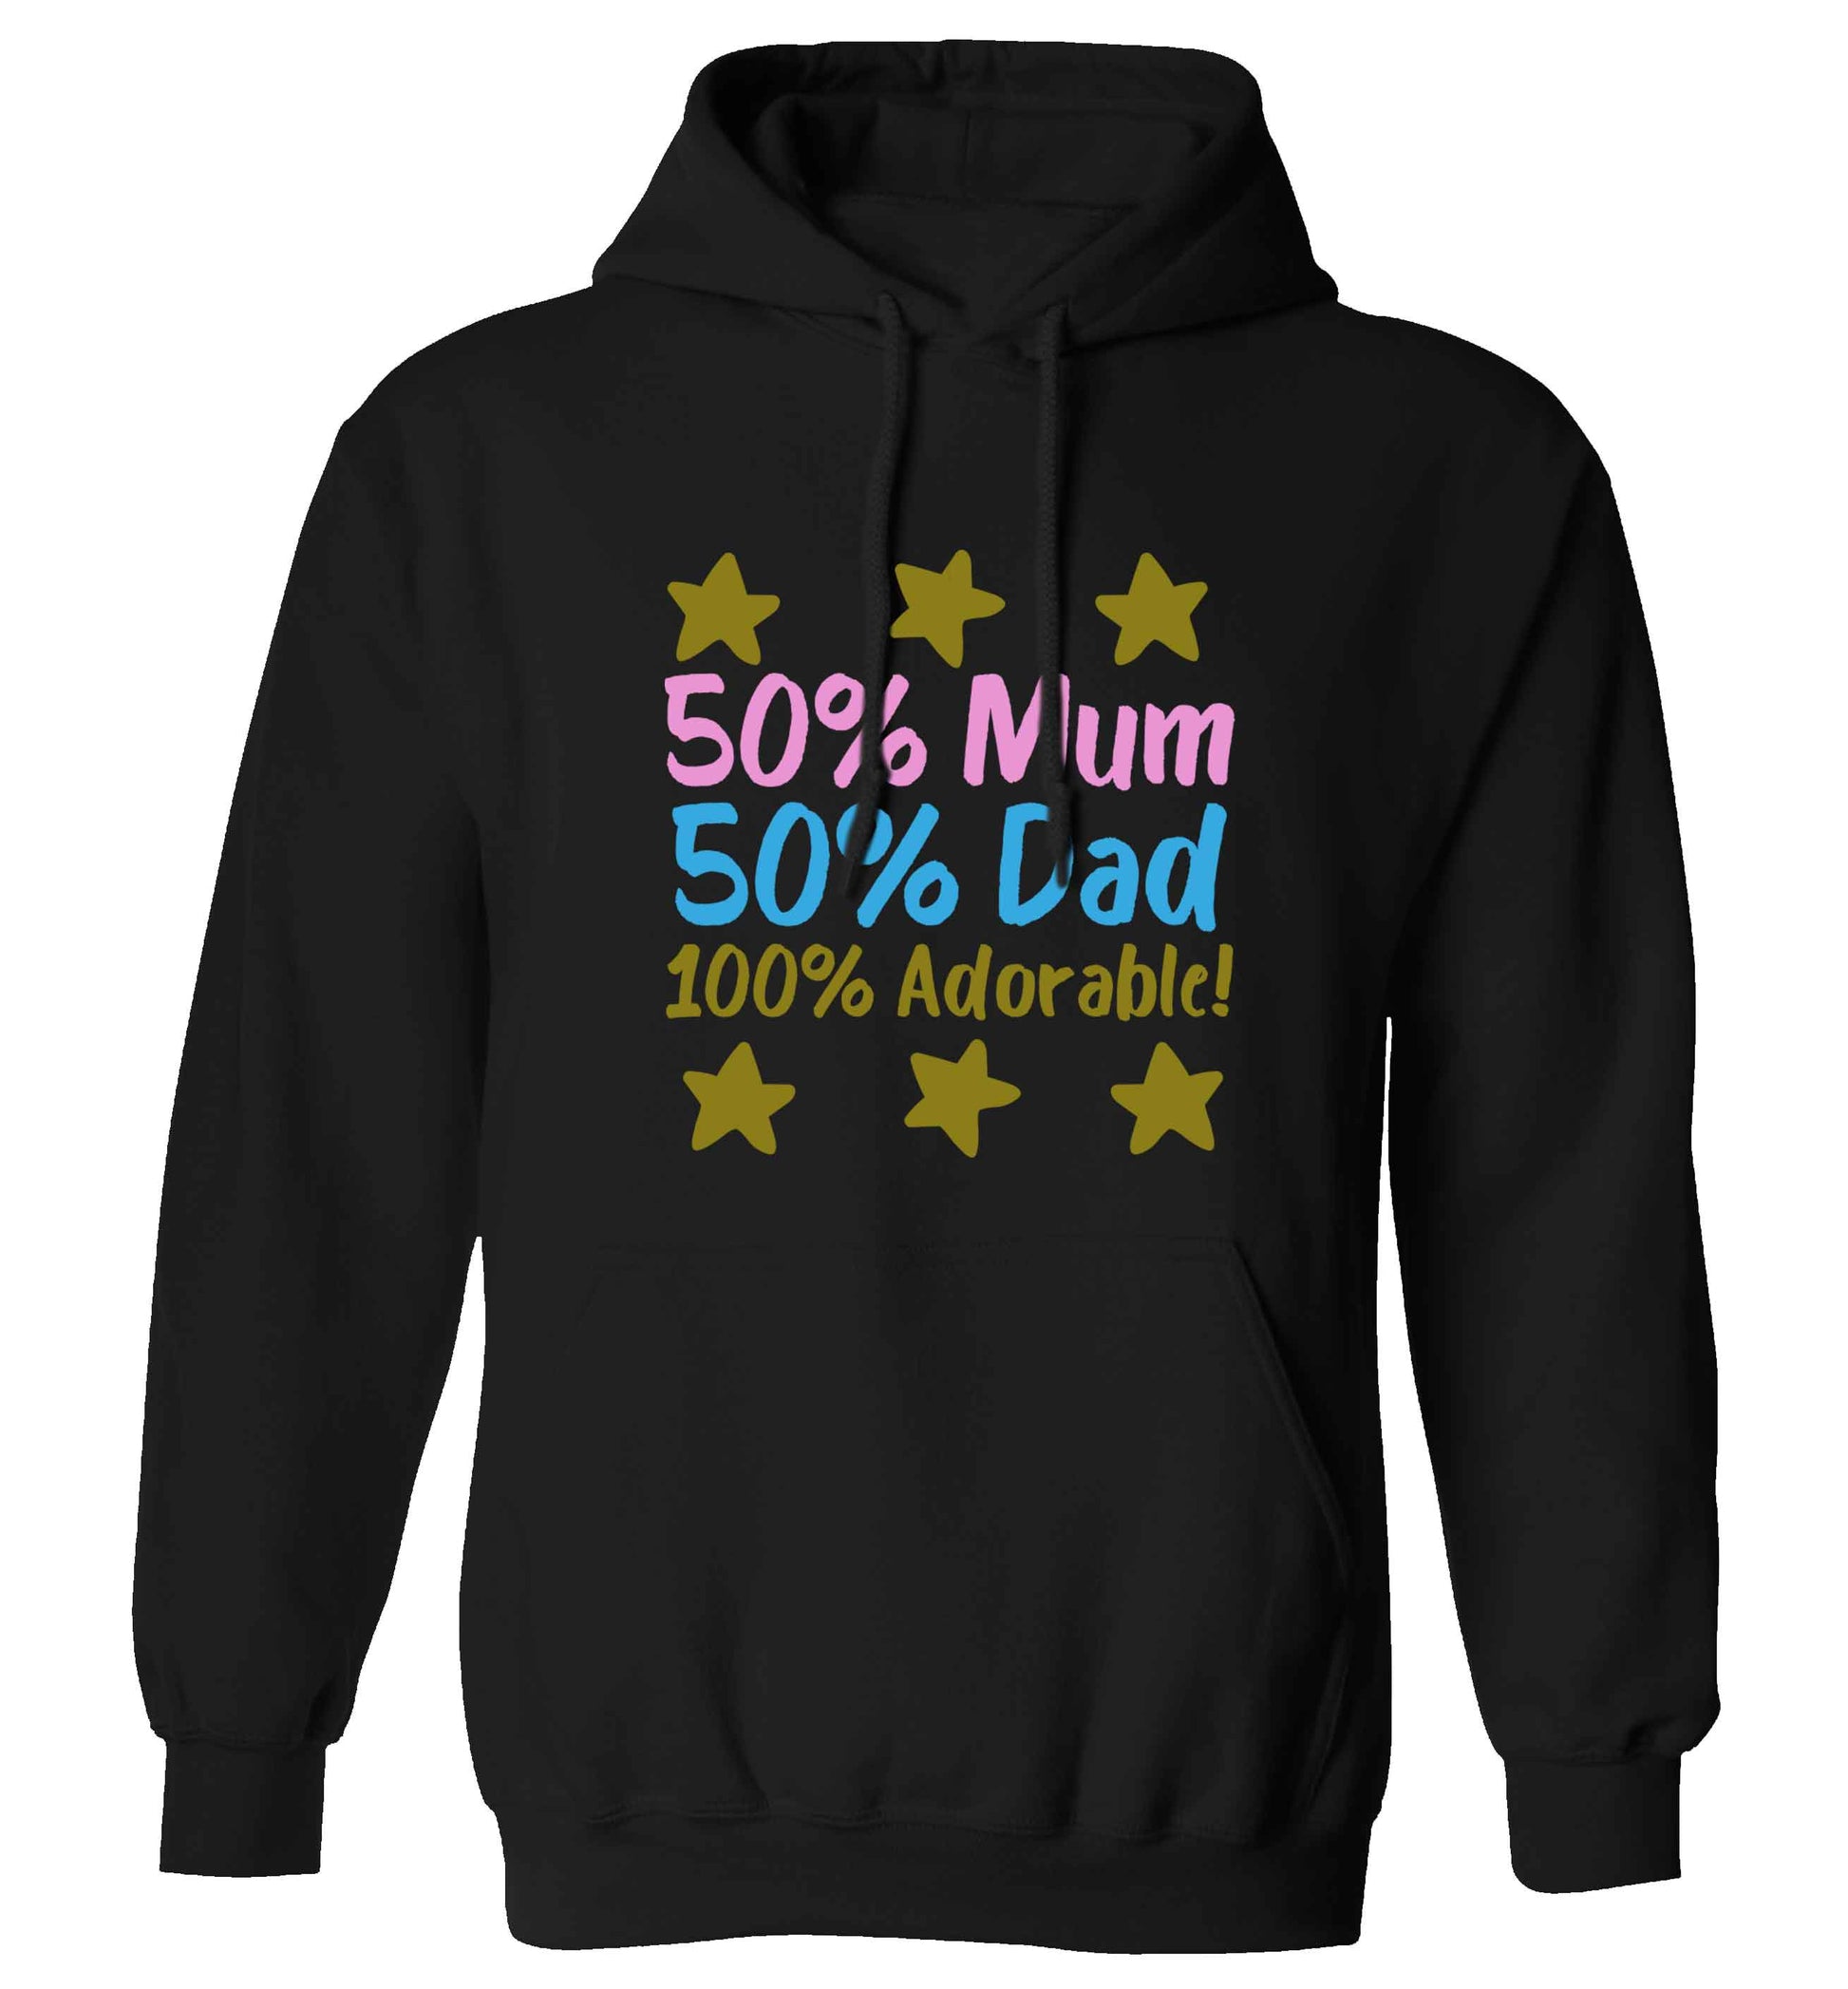 50% mum 50% dad 100% adorable adults unisex black hoodie 2XL